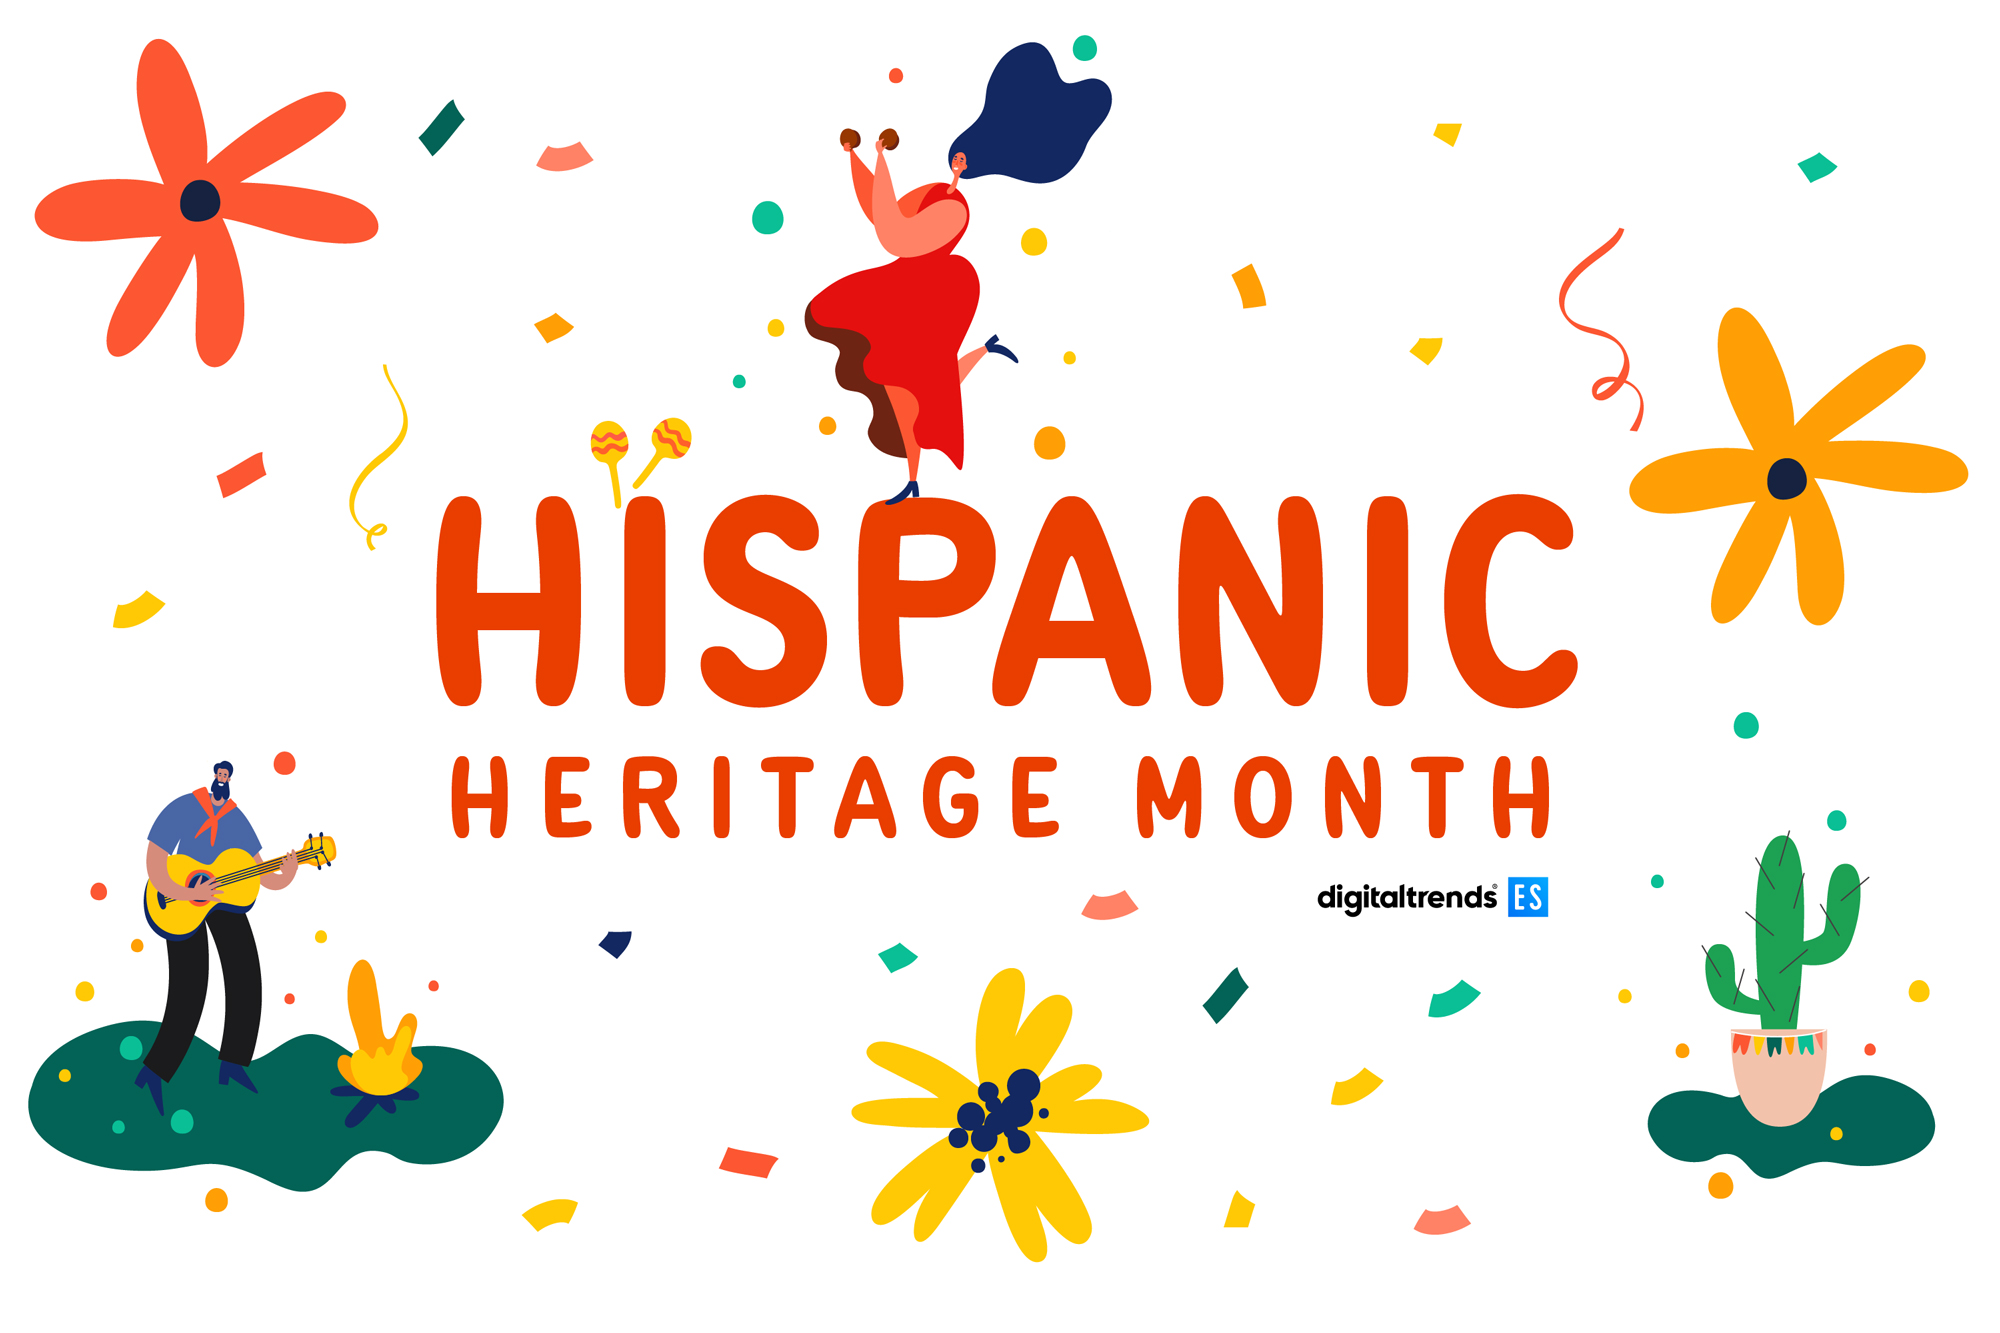 Why We Celebrate Hispanic Heritage Month